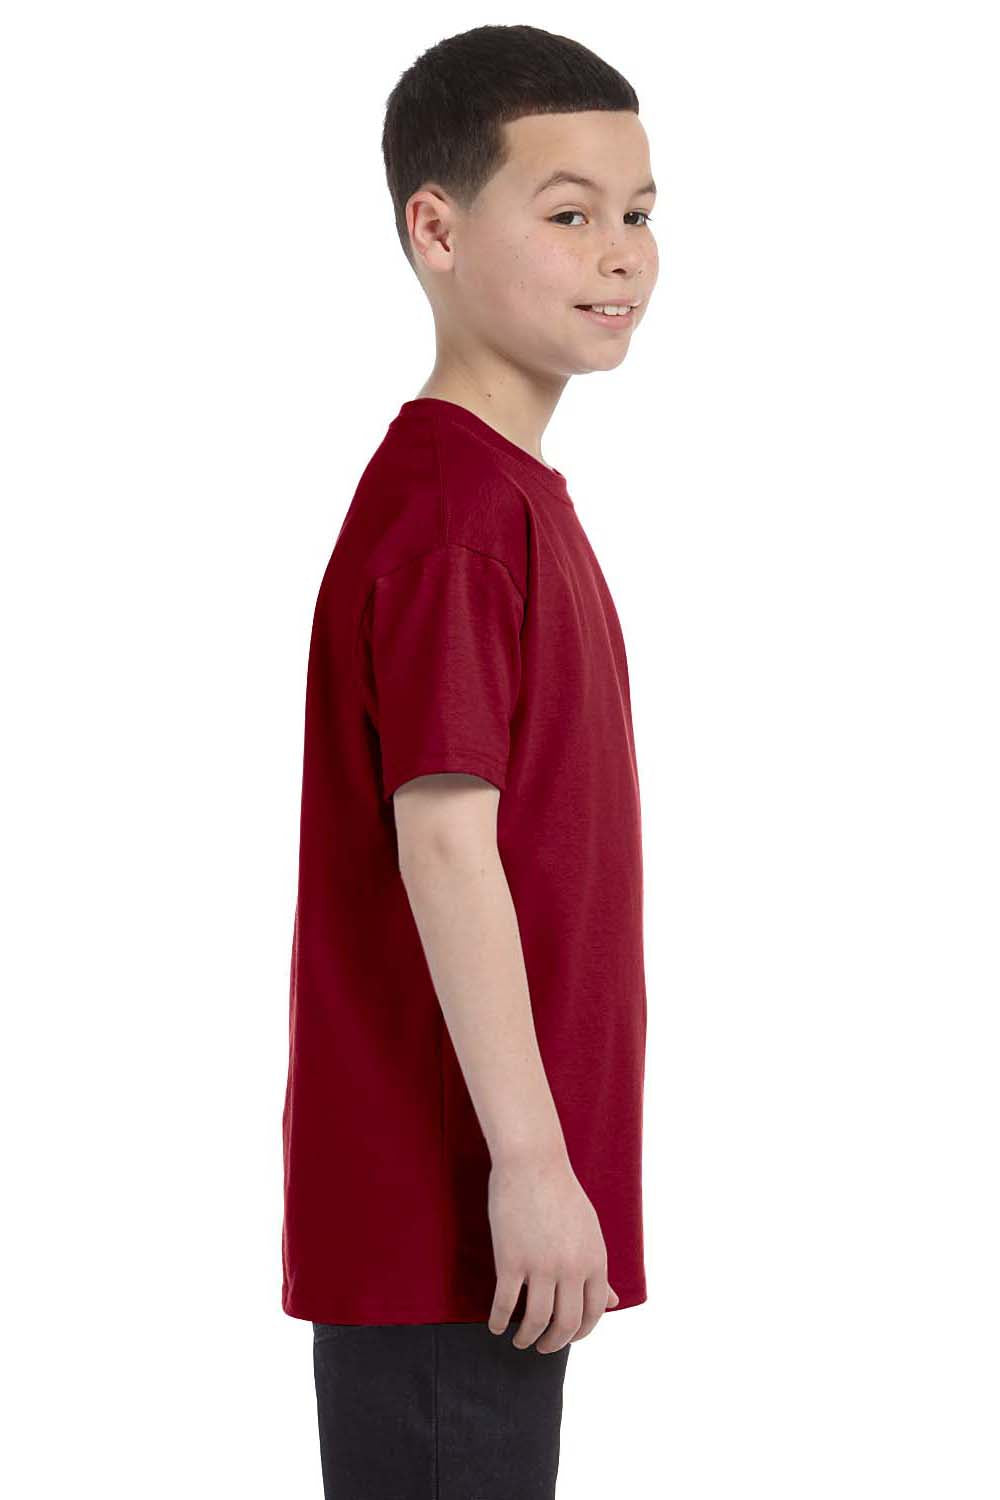 Jerzees 29B Youth Dri-Power Moisture Wicking Short Sleeve Crewneck T-Shirt Cardinal Red Side